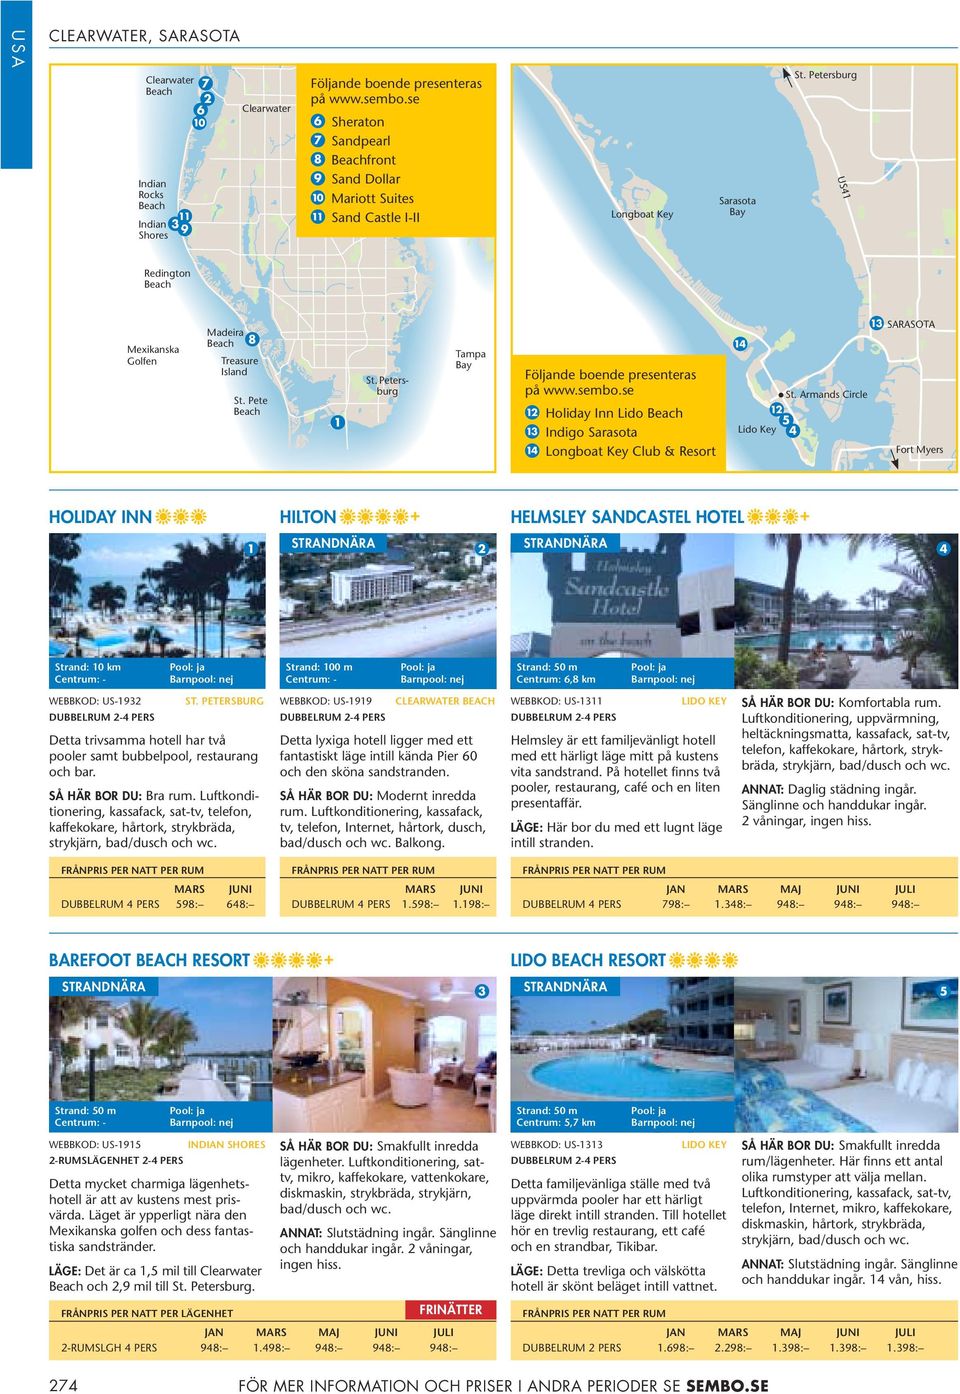 Petersburg Tampa Bay Följande boende presenteras på www.sembo.se Holiday Inn Lido Indigo Sarasota Longboat Key Club & Resort SARASOTA St.